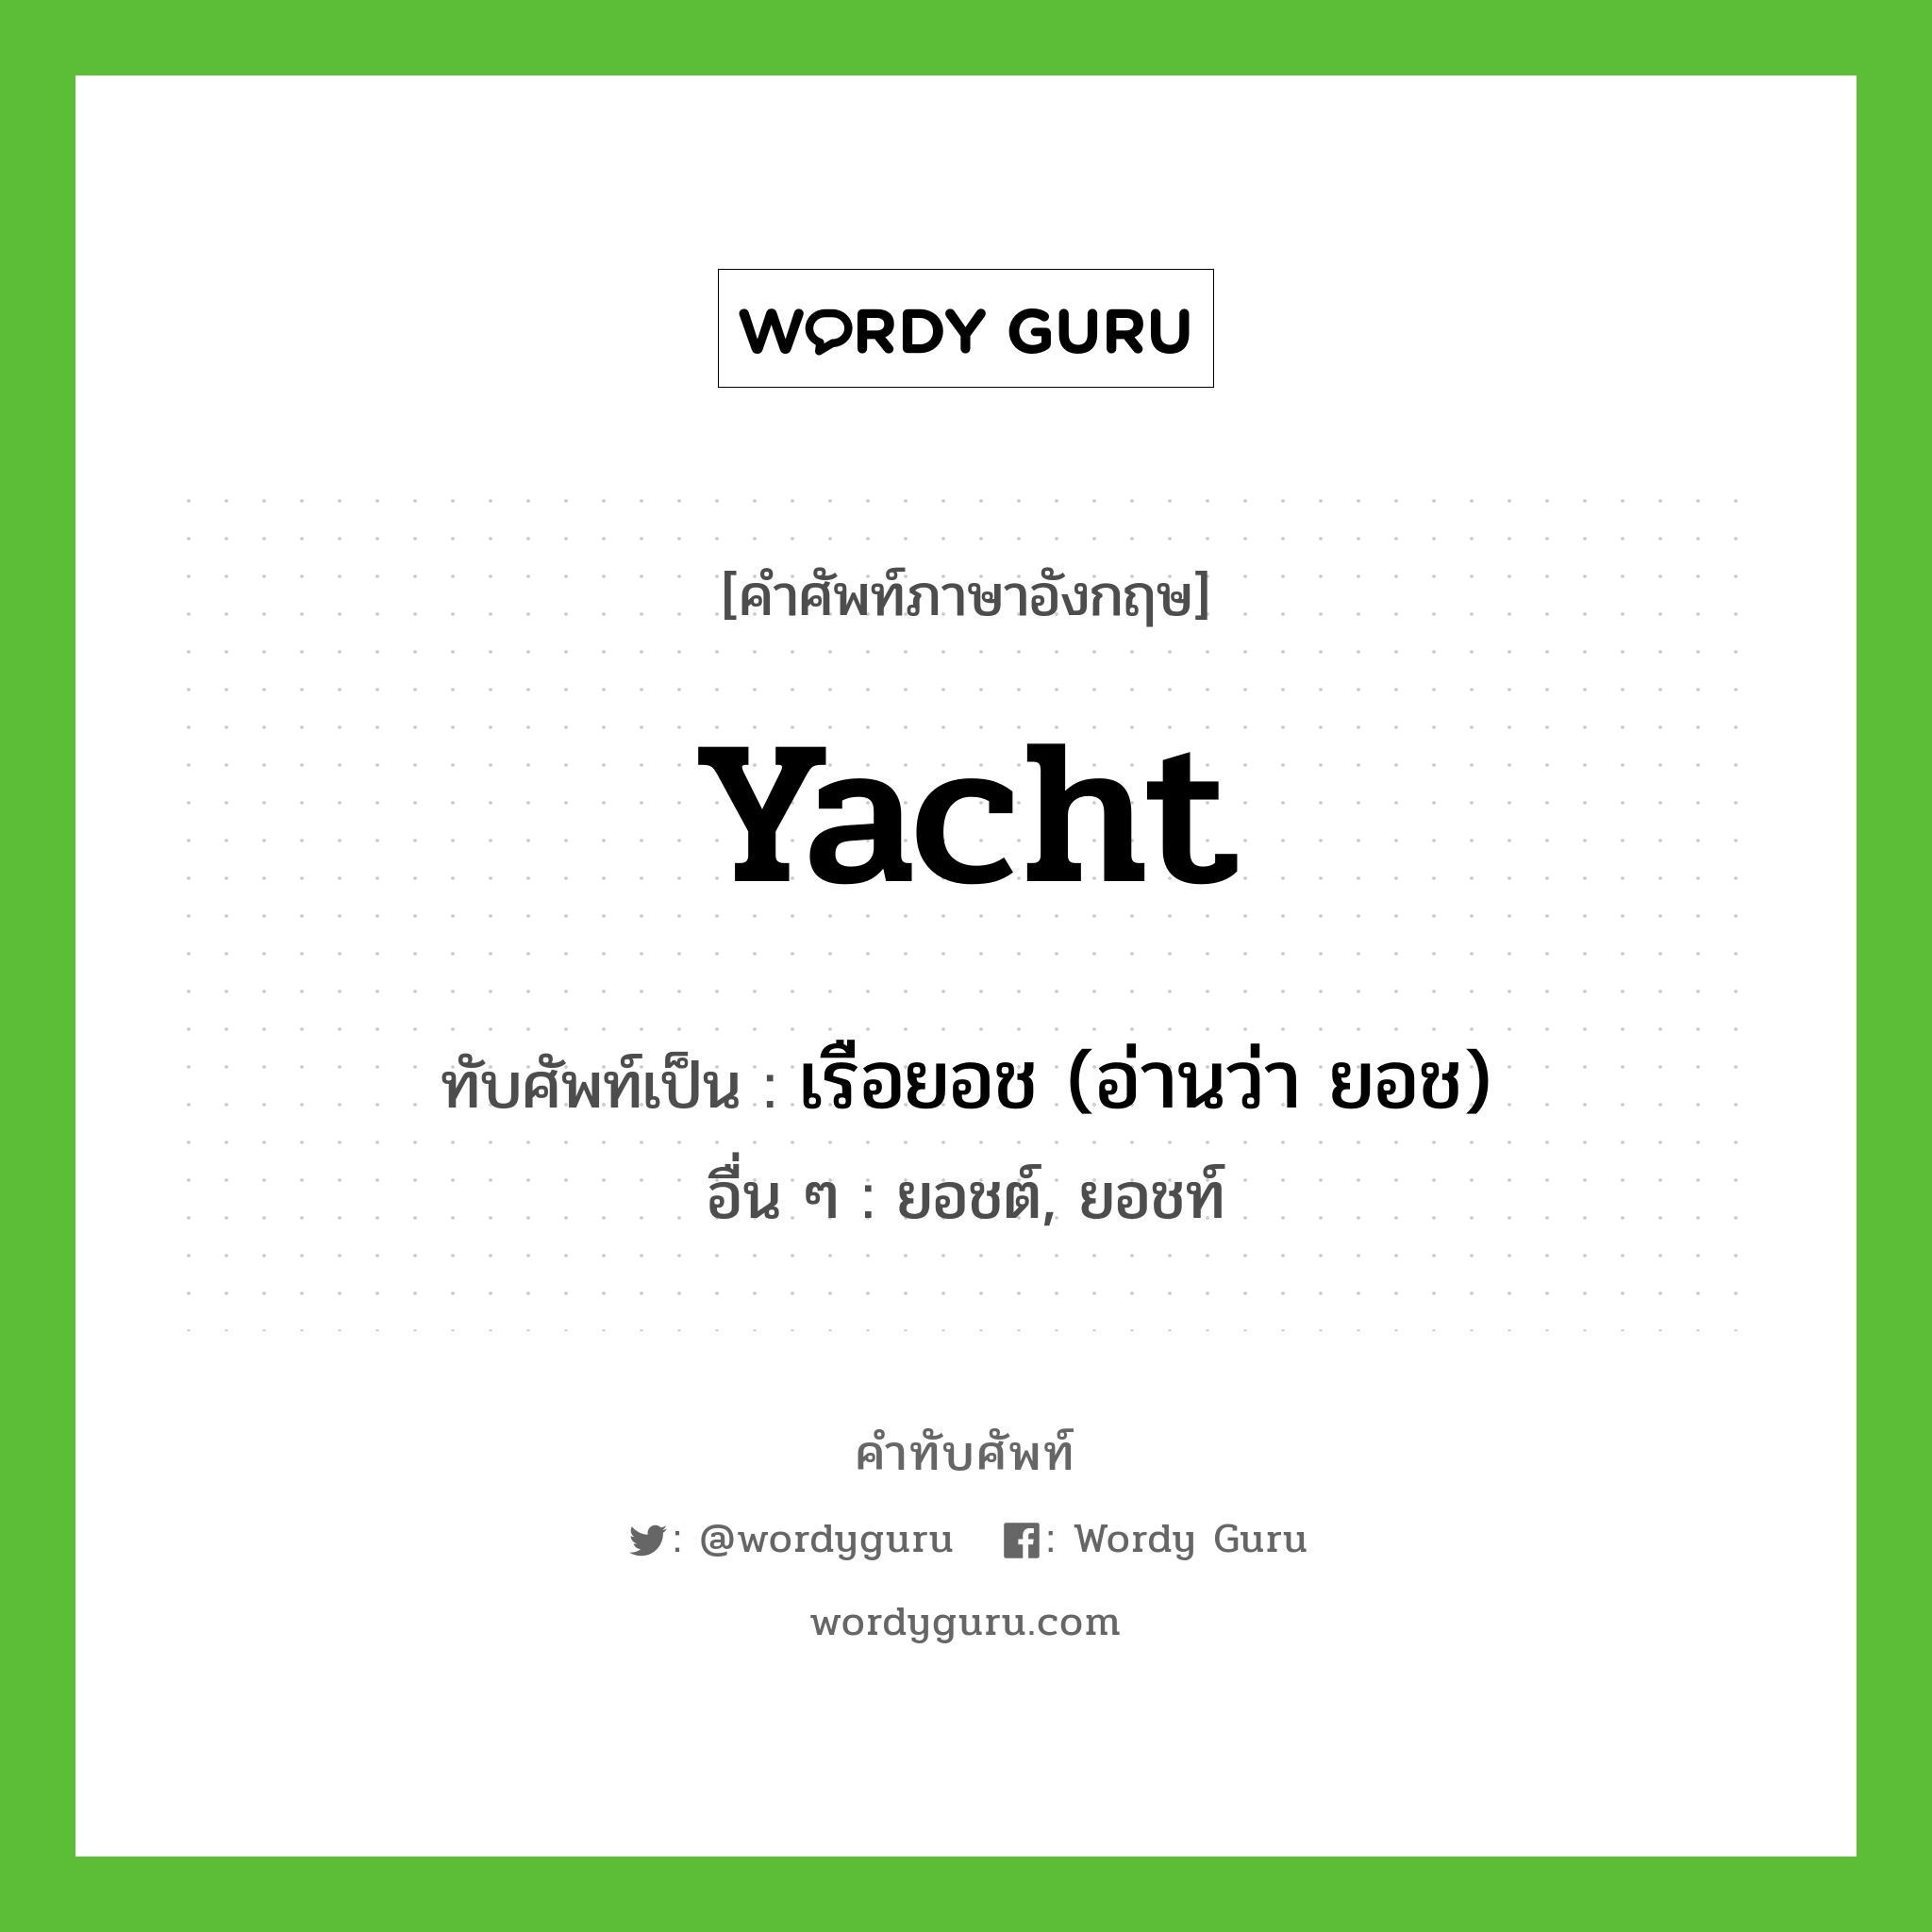 yacht เขียนเป็นคำไทยว่าอะไร?, คำศัพท์ภาษาอังกฤษ yacht ทับศัพท์เป็น เรือยอช (อ่านว่า ยอช) อื่น ๆ ยอชต์, ยอชท์